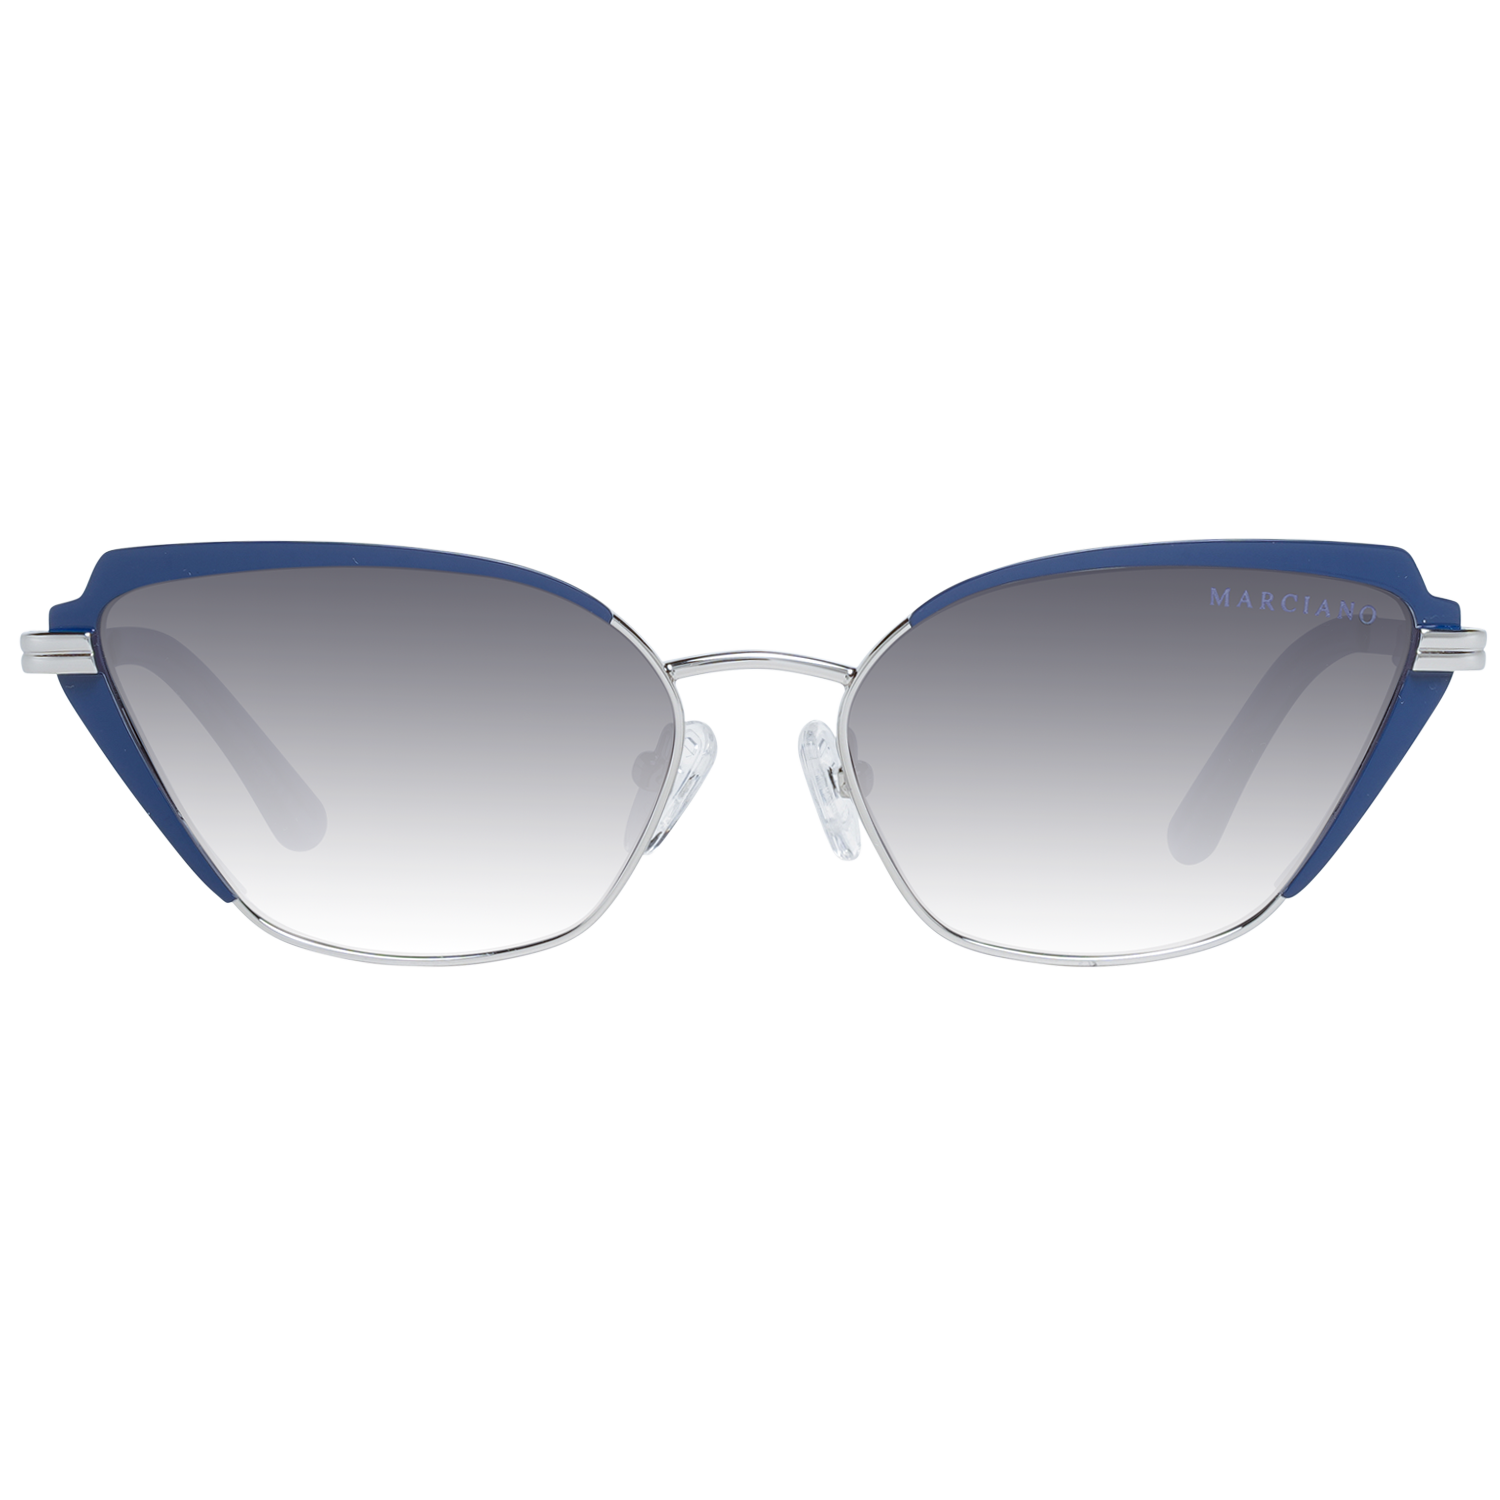 Marciano by Guess Sunglasses Marciano by Guess Sunglasses GM0818 10W 56 Eyeglasses Eyewear UK USA Australia 